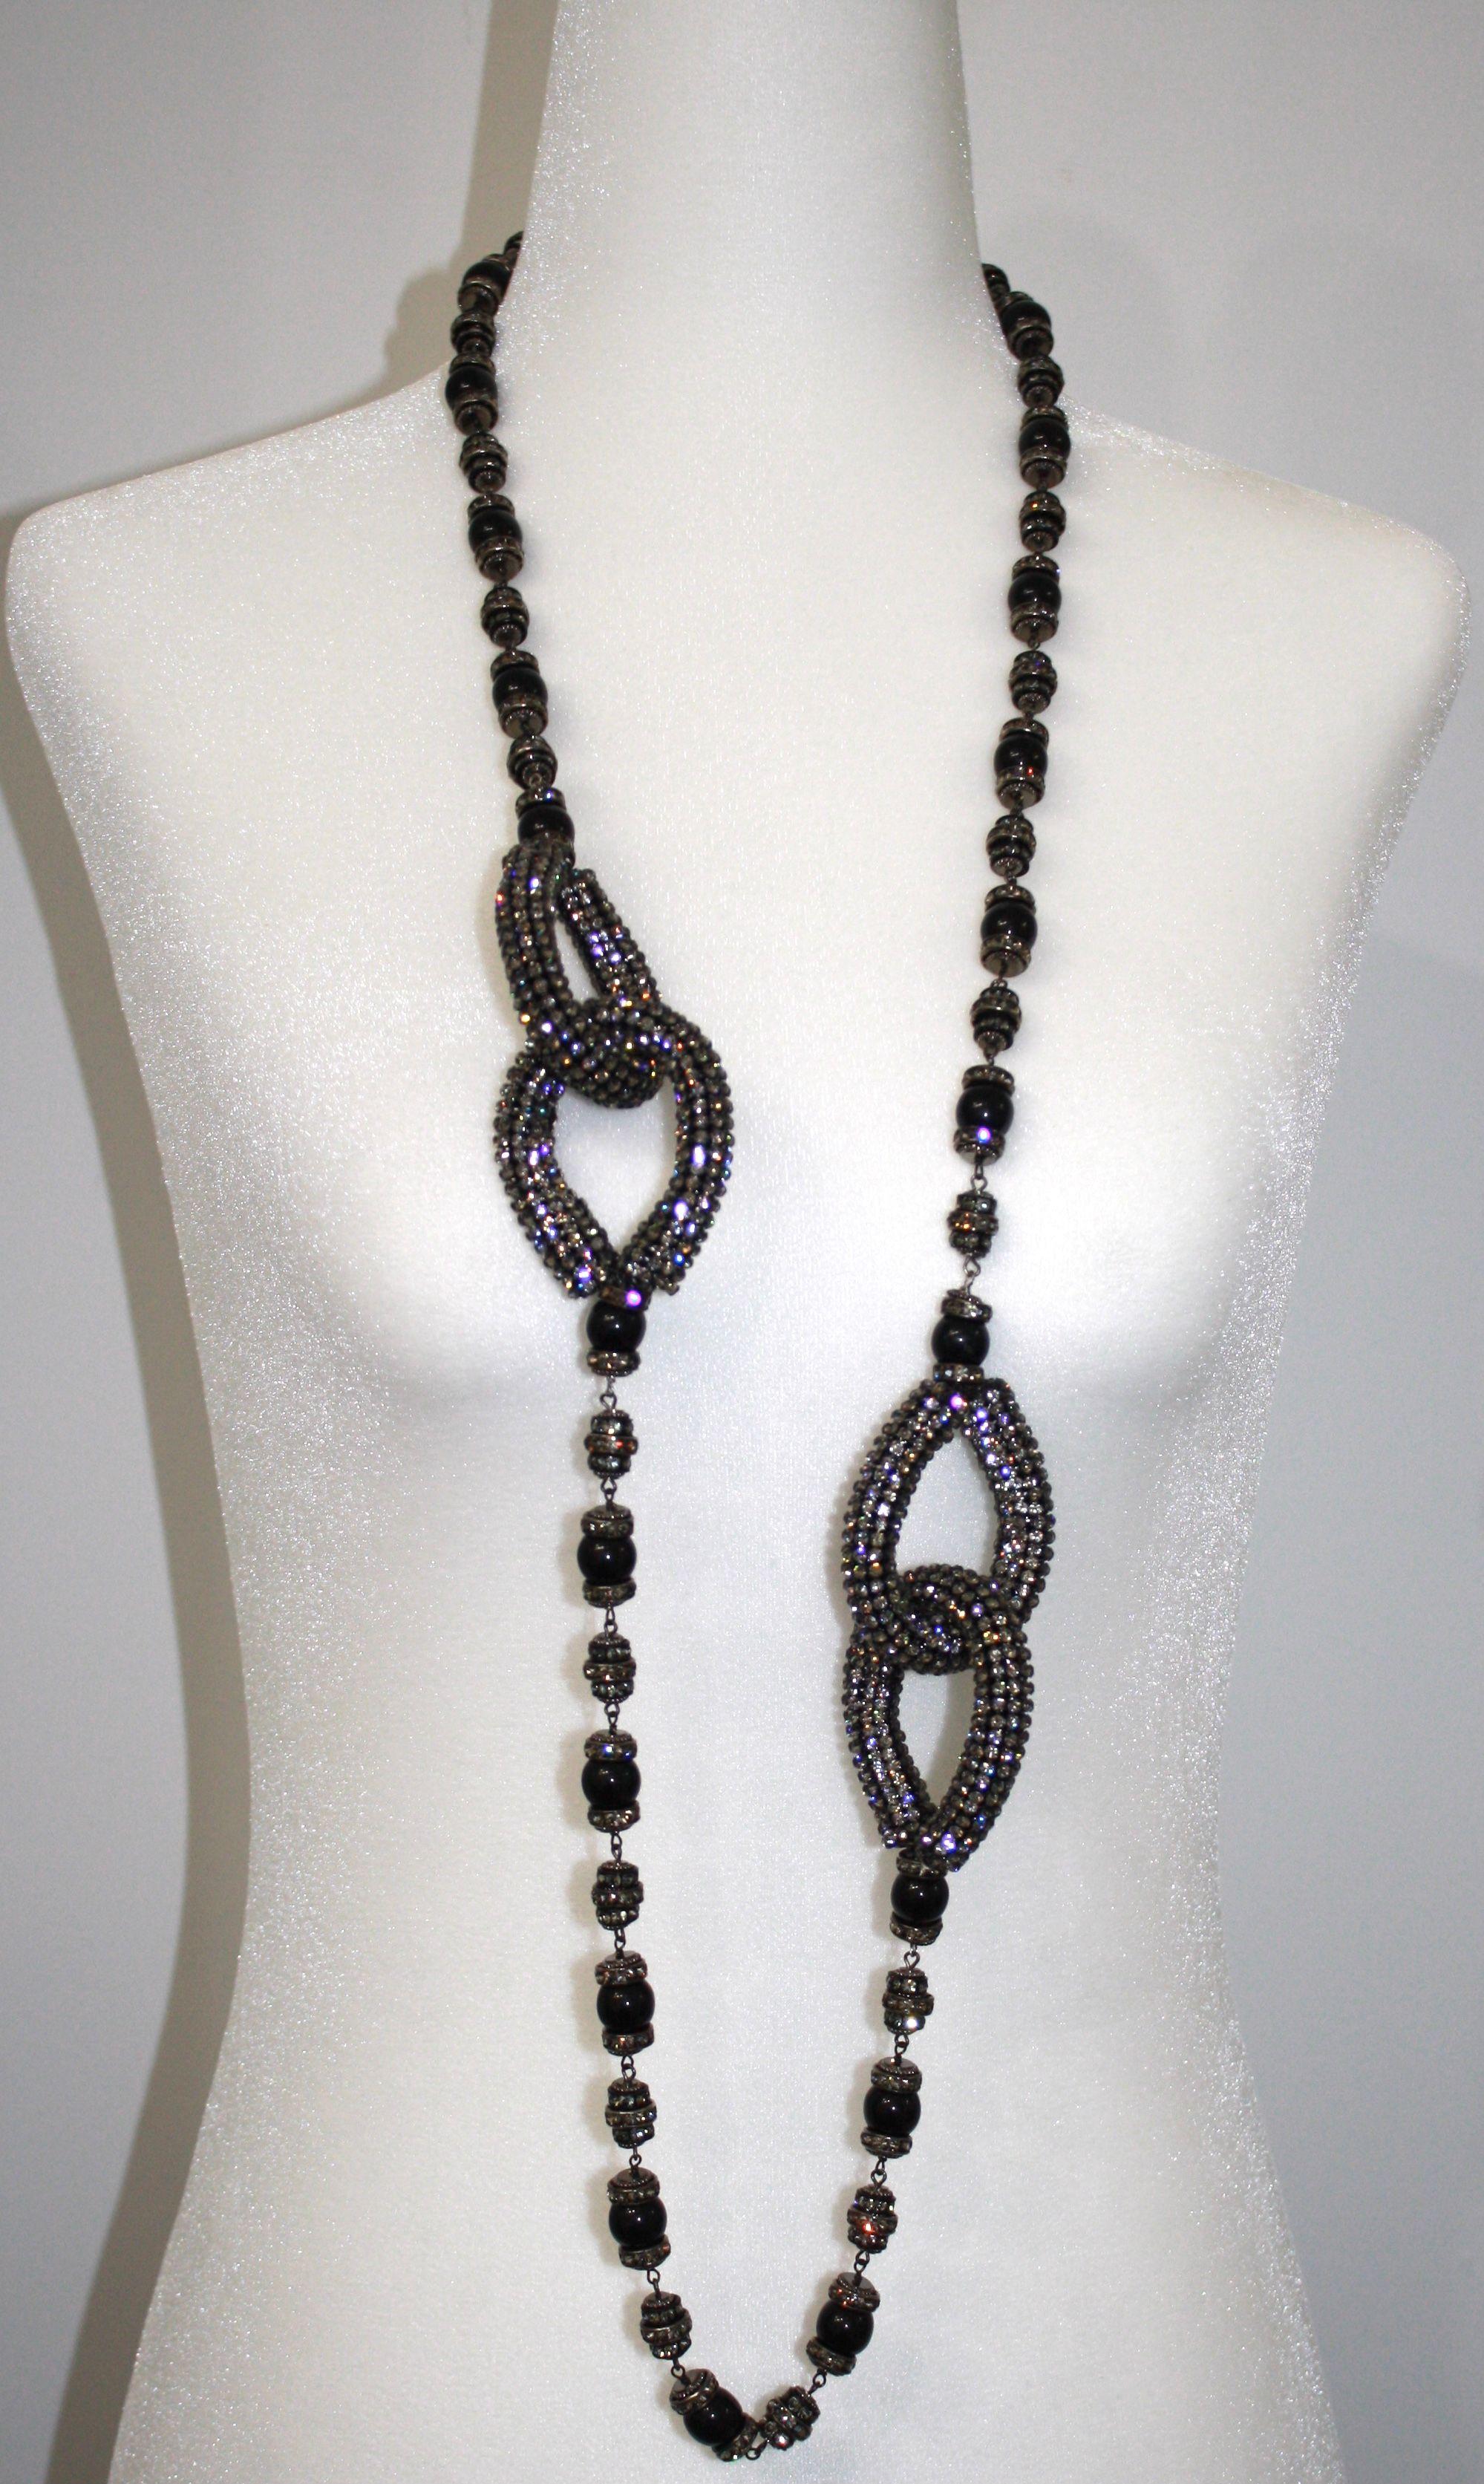 Long sautoir that can be wrapped around into a choker. Handmade glass beads and swarovski crystal set on black metal.